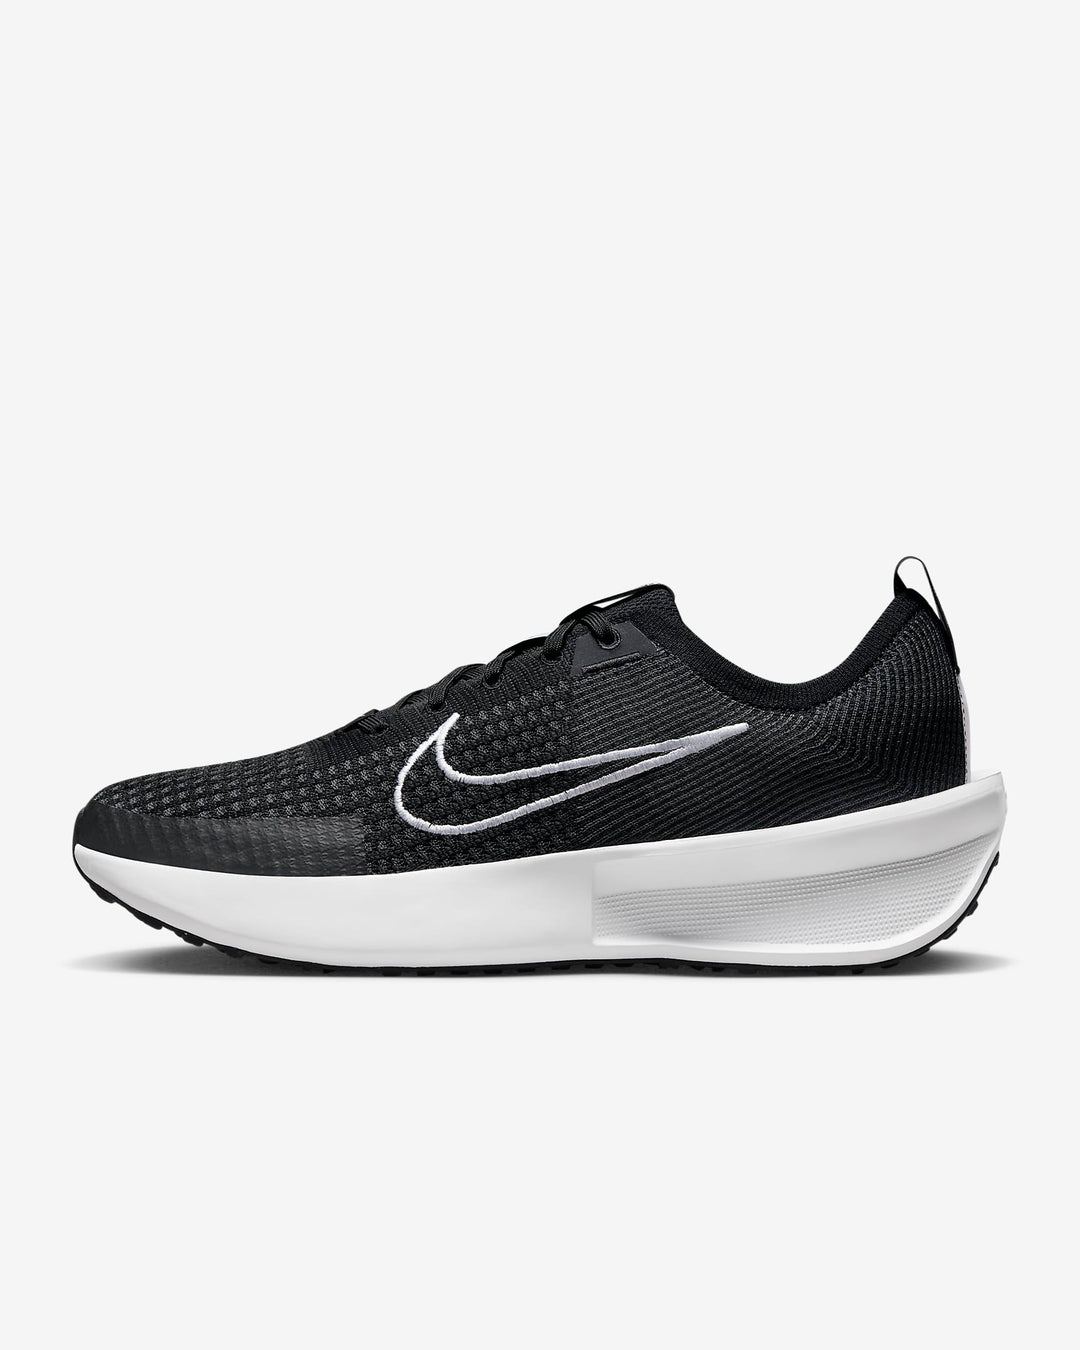 Giày Nike Interact Run Men Road Running Shoes #Black